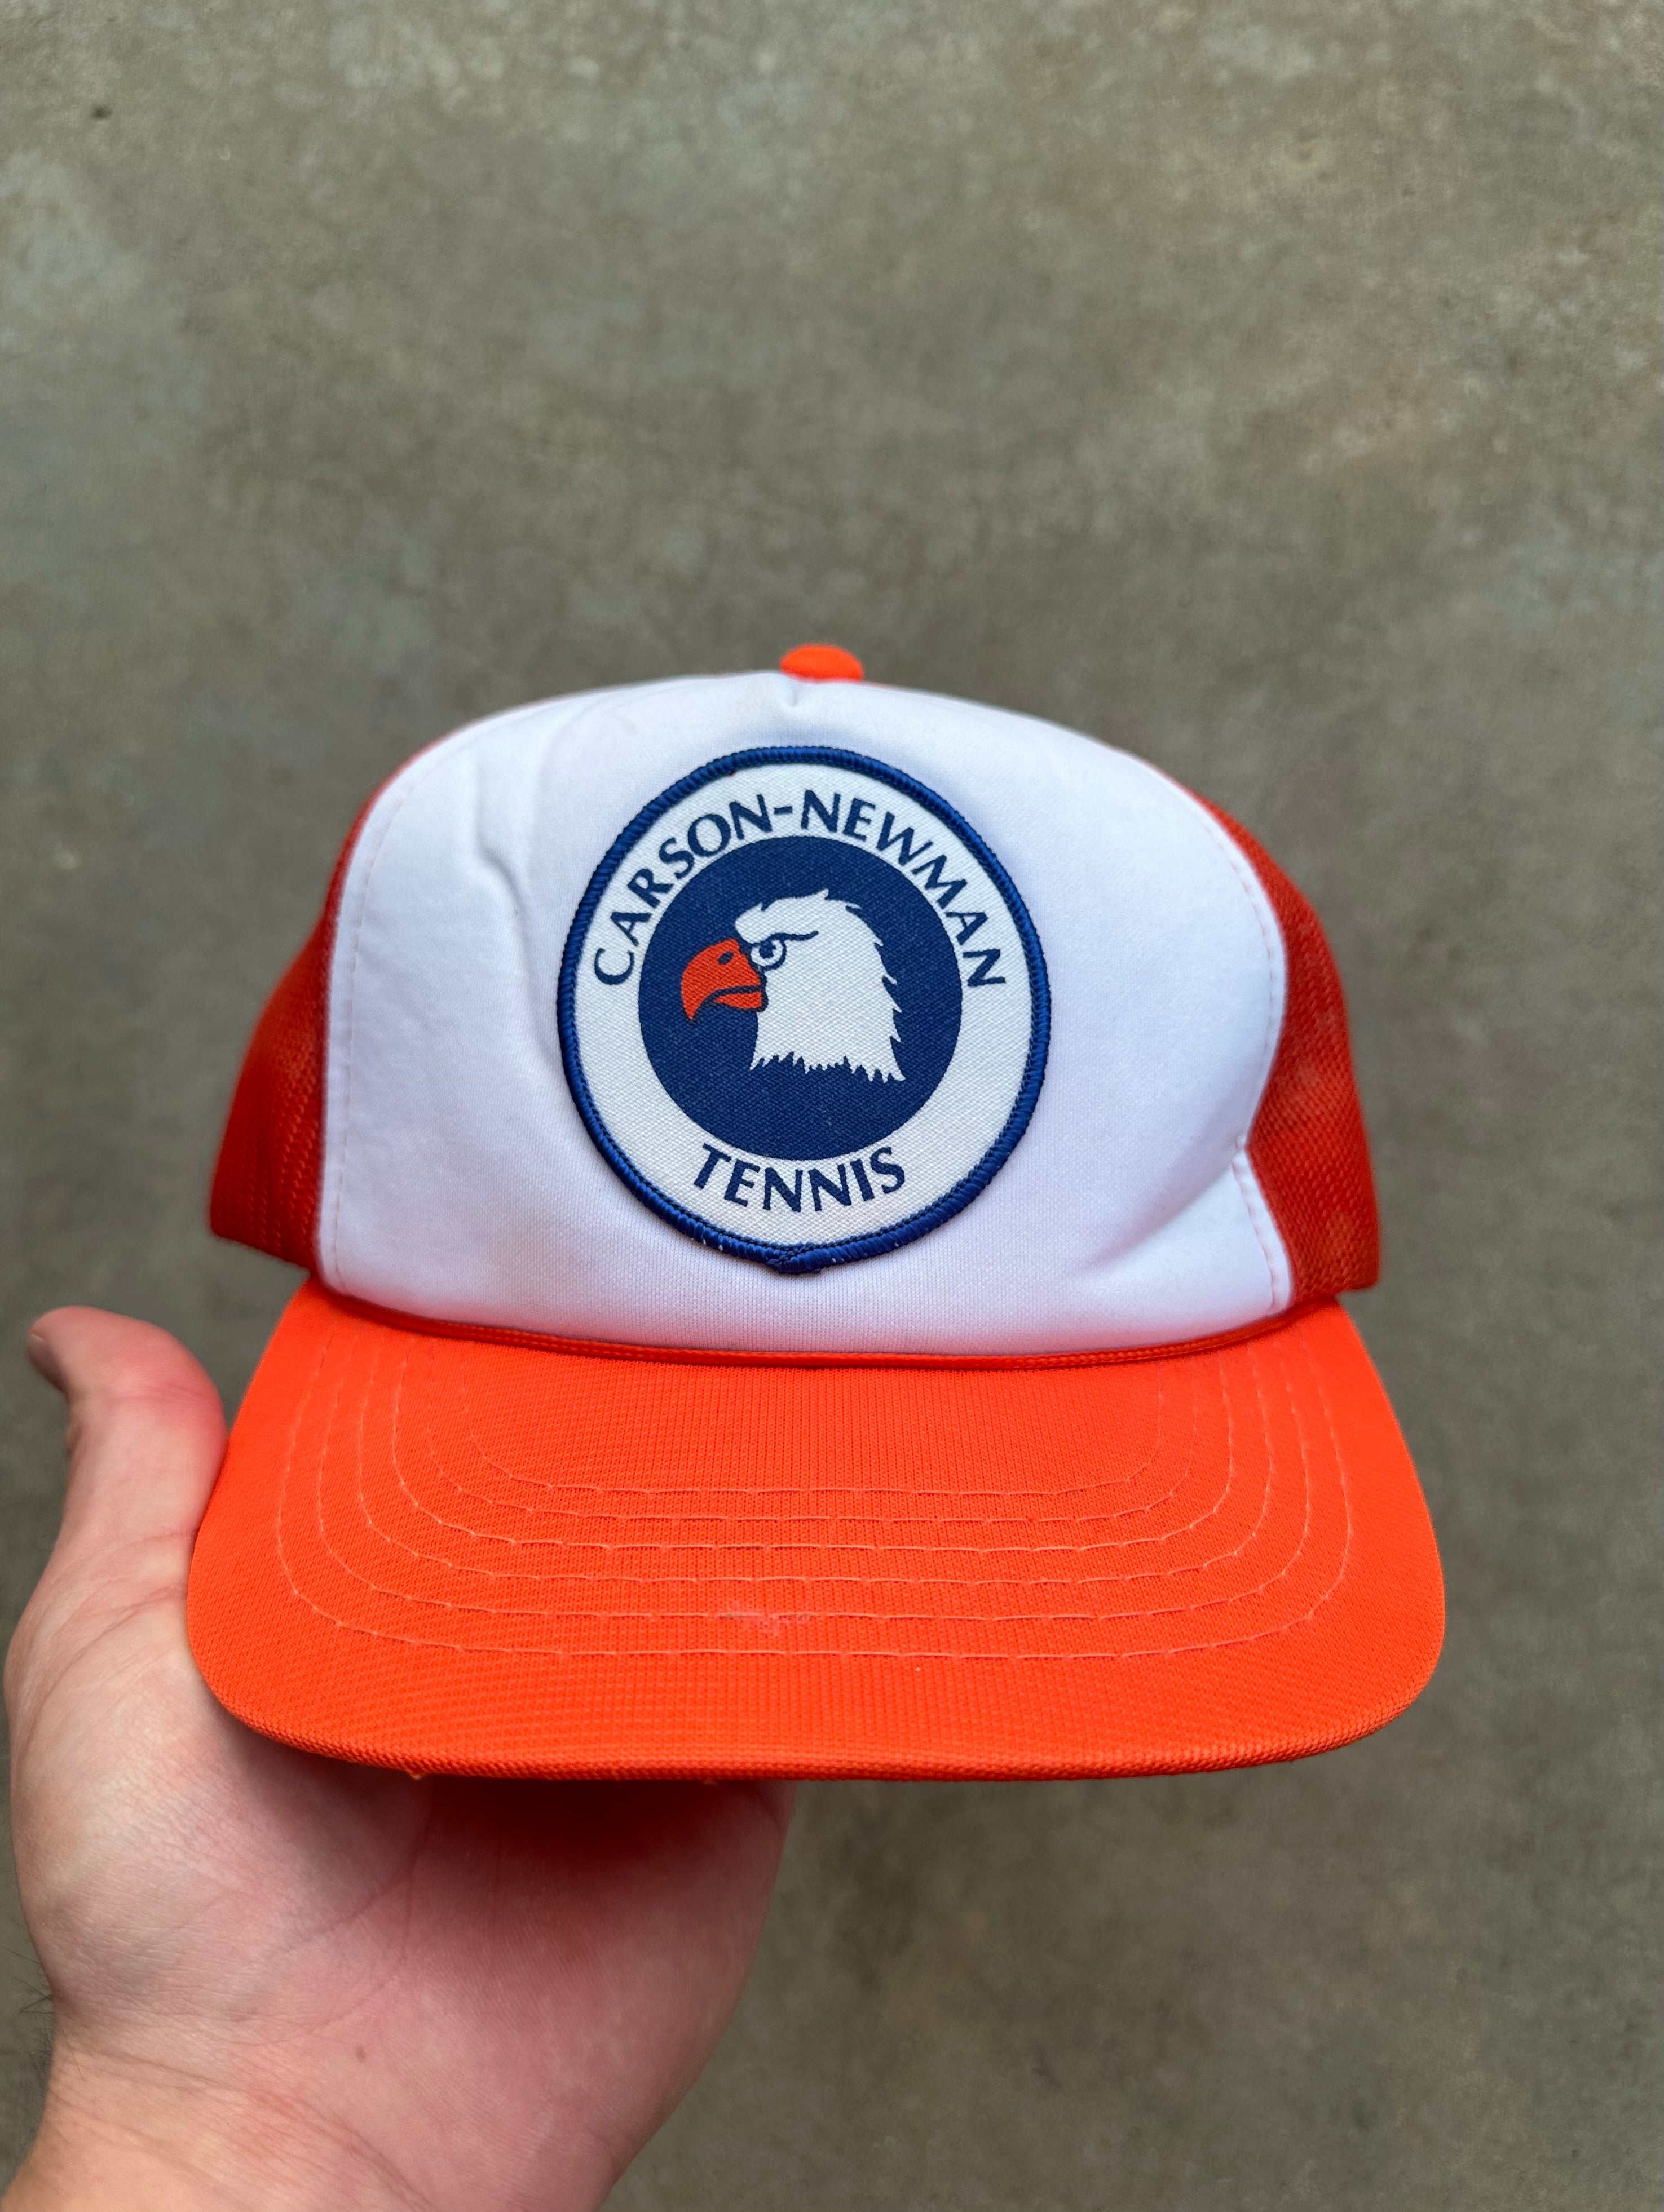 1980s Carson-Newman Tennis Trucker Hat